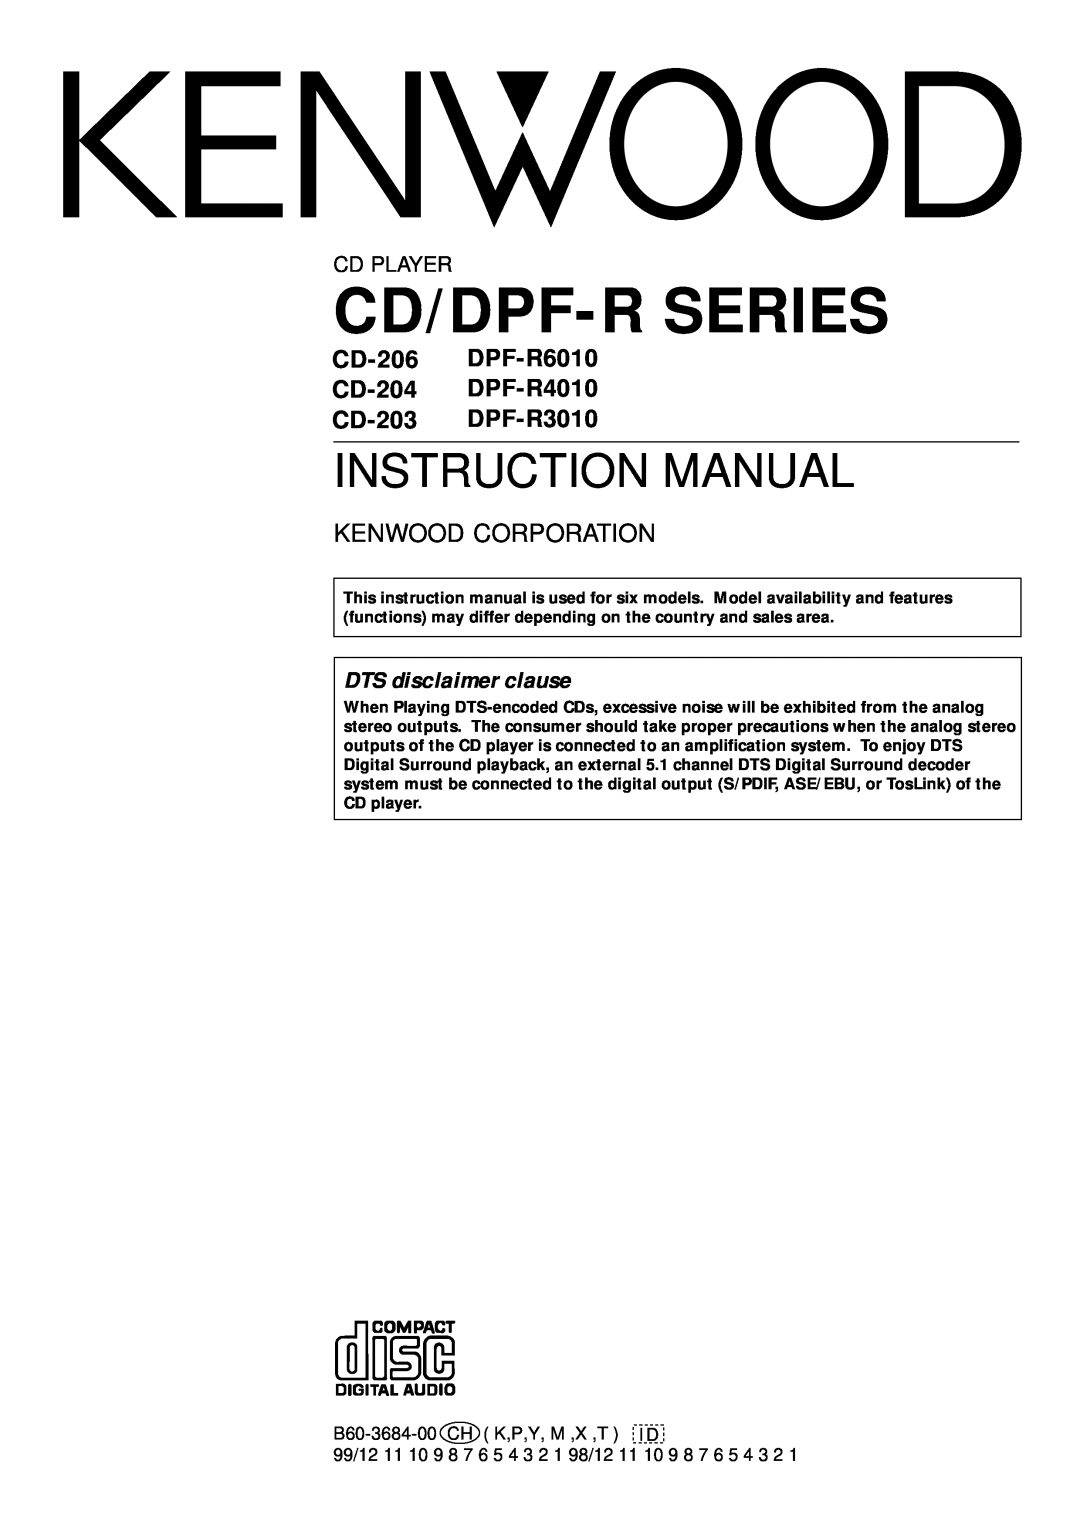 Kenwood instruction manual DTS disclaimer clause, Cd/Dpf-Rseries, CD-206 DPF-R6010 CD-204 DPF-R4010, CD-203 DPF-R3010 